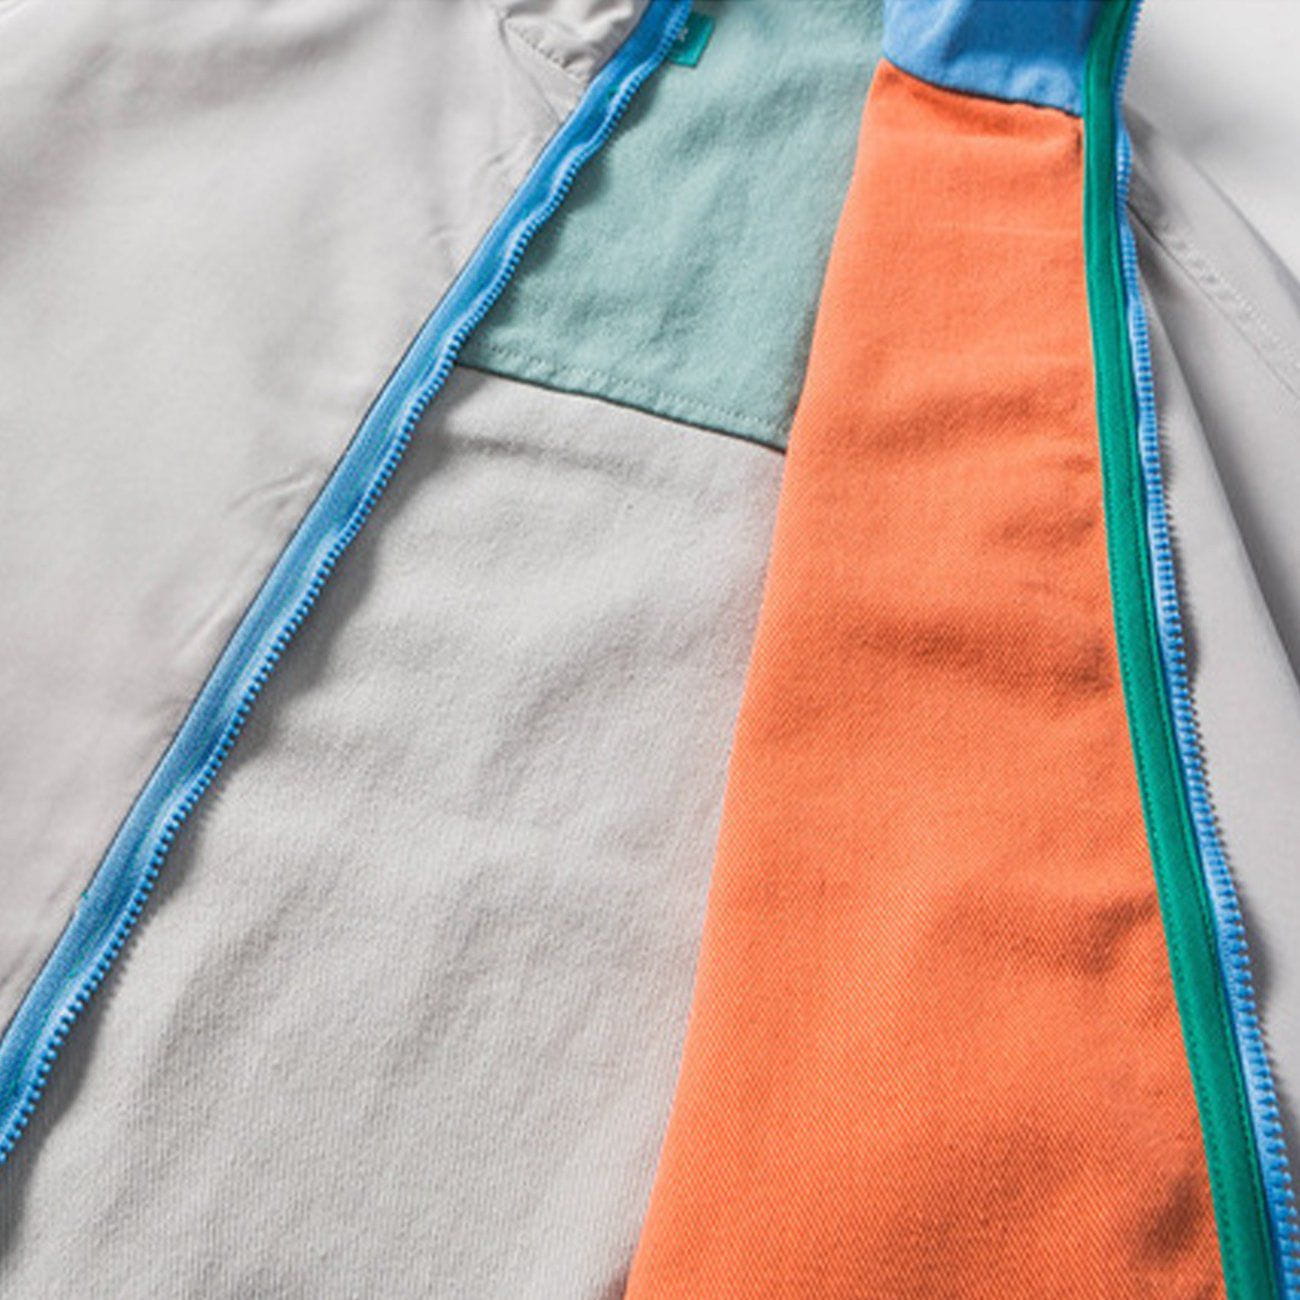 Majesda® - Multicolor Stitching Jacket outfit ideas, streetwear fashion - majesda.com